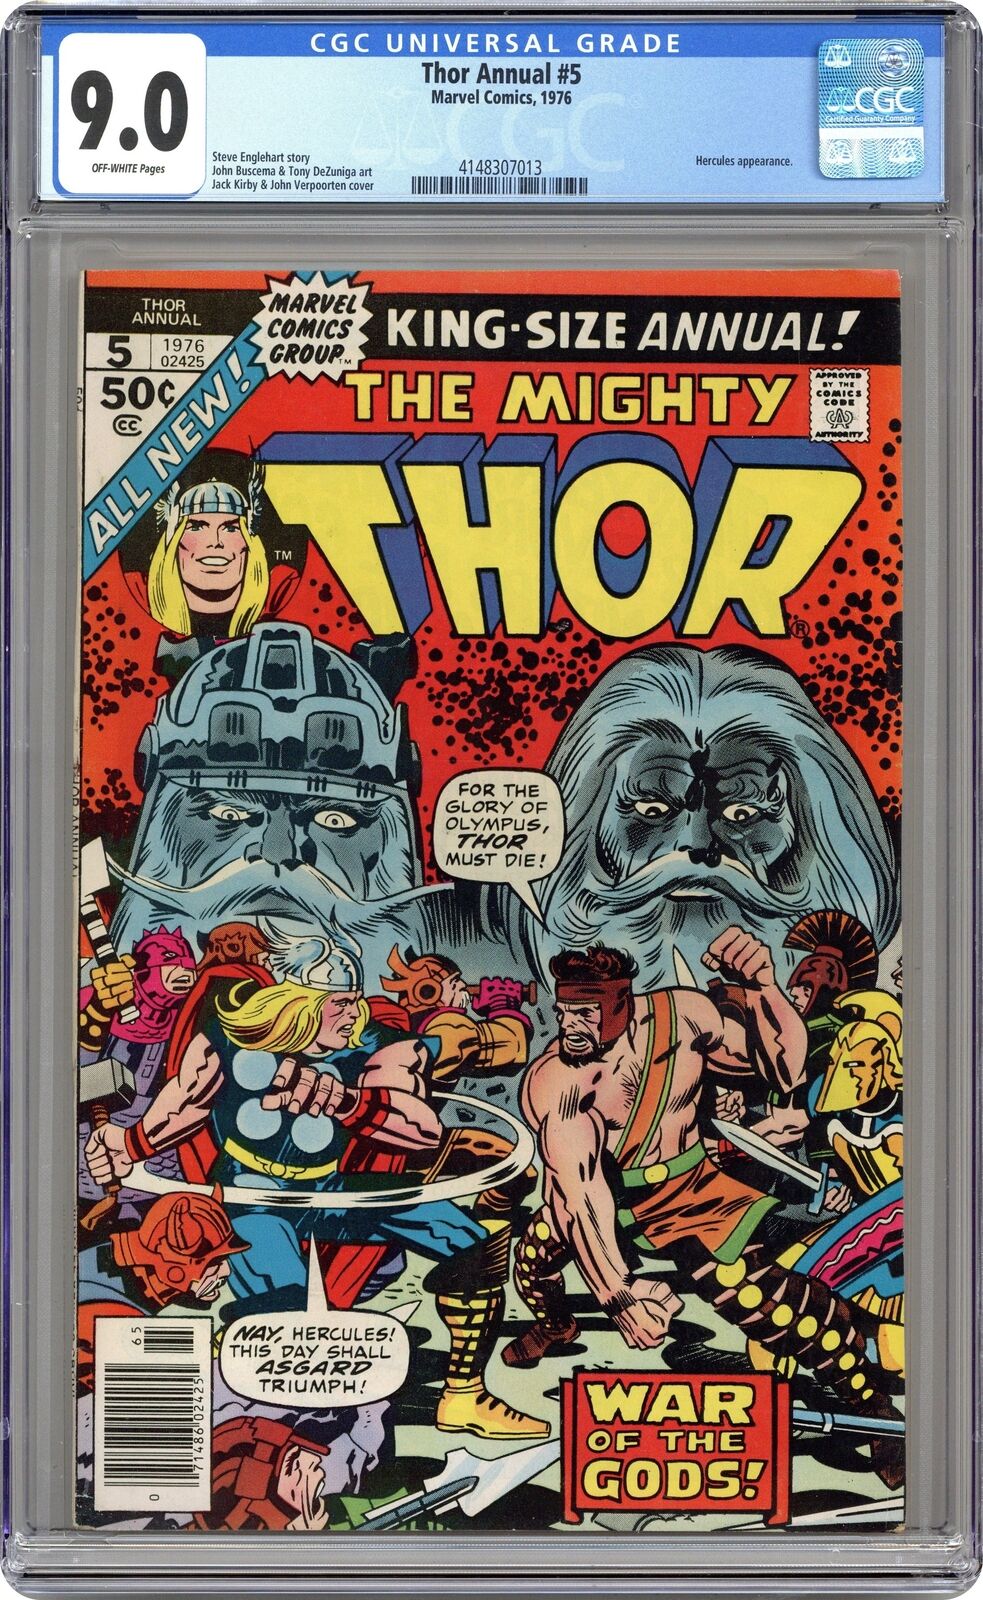 Thor Journey Into Mystery #5 CGC 9.0 1976 4148307013